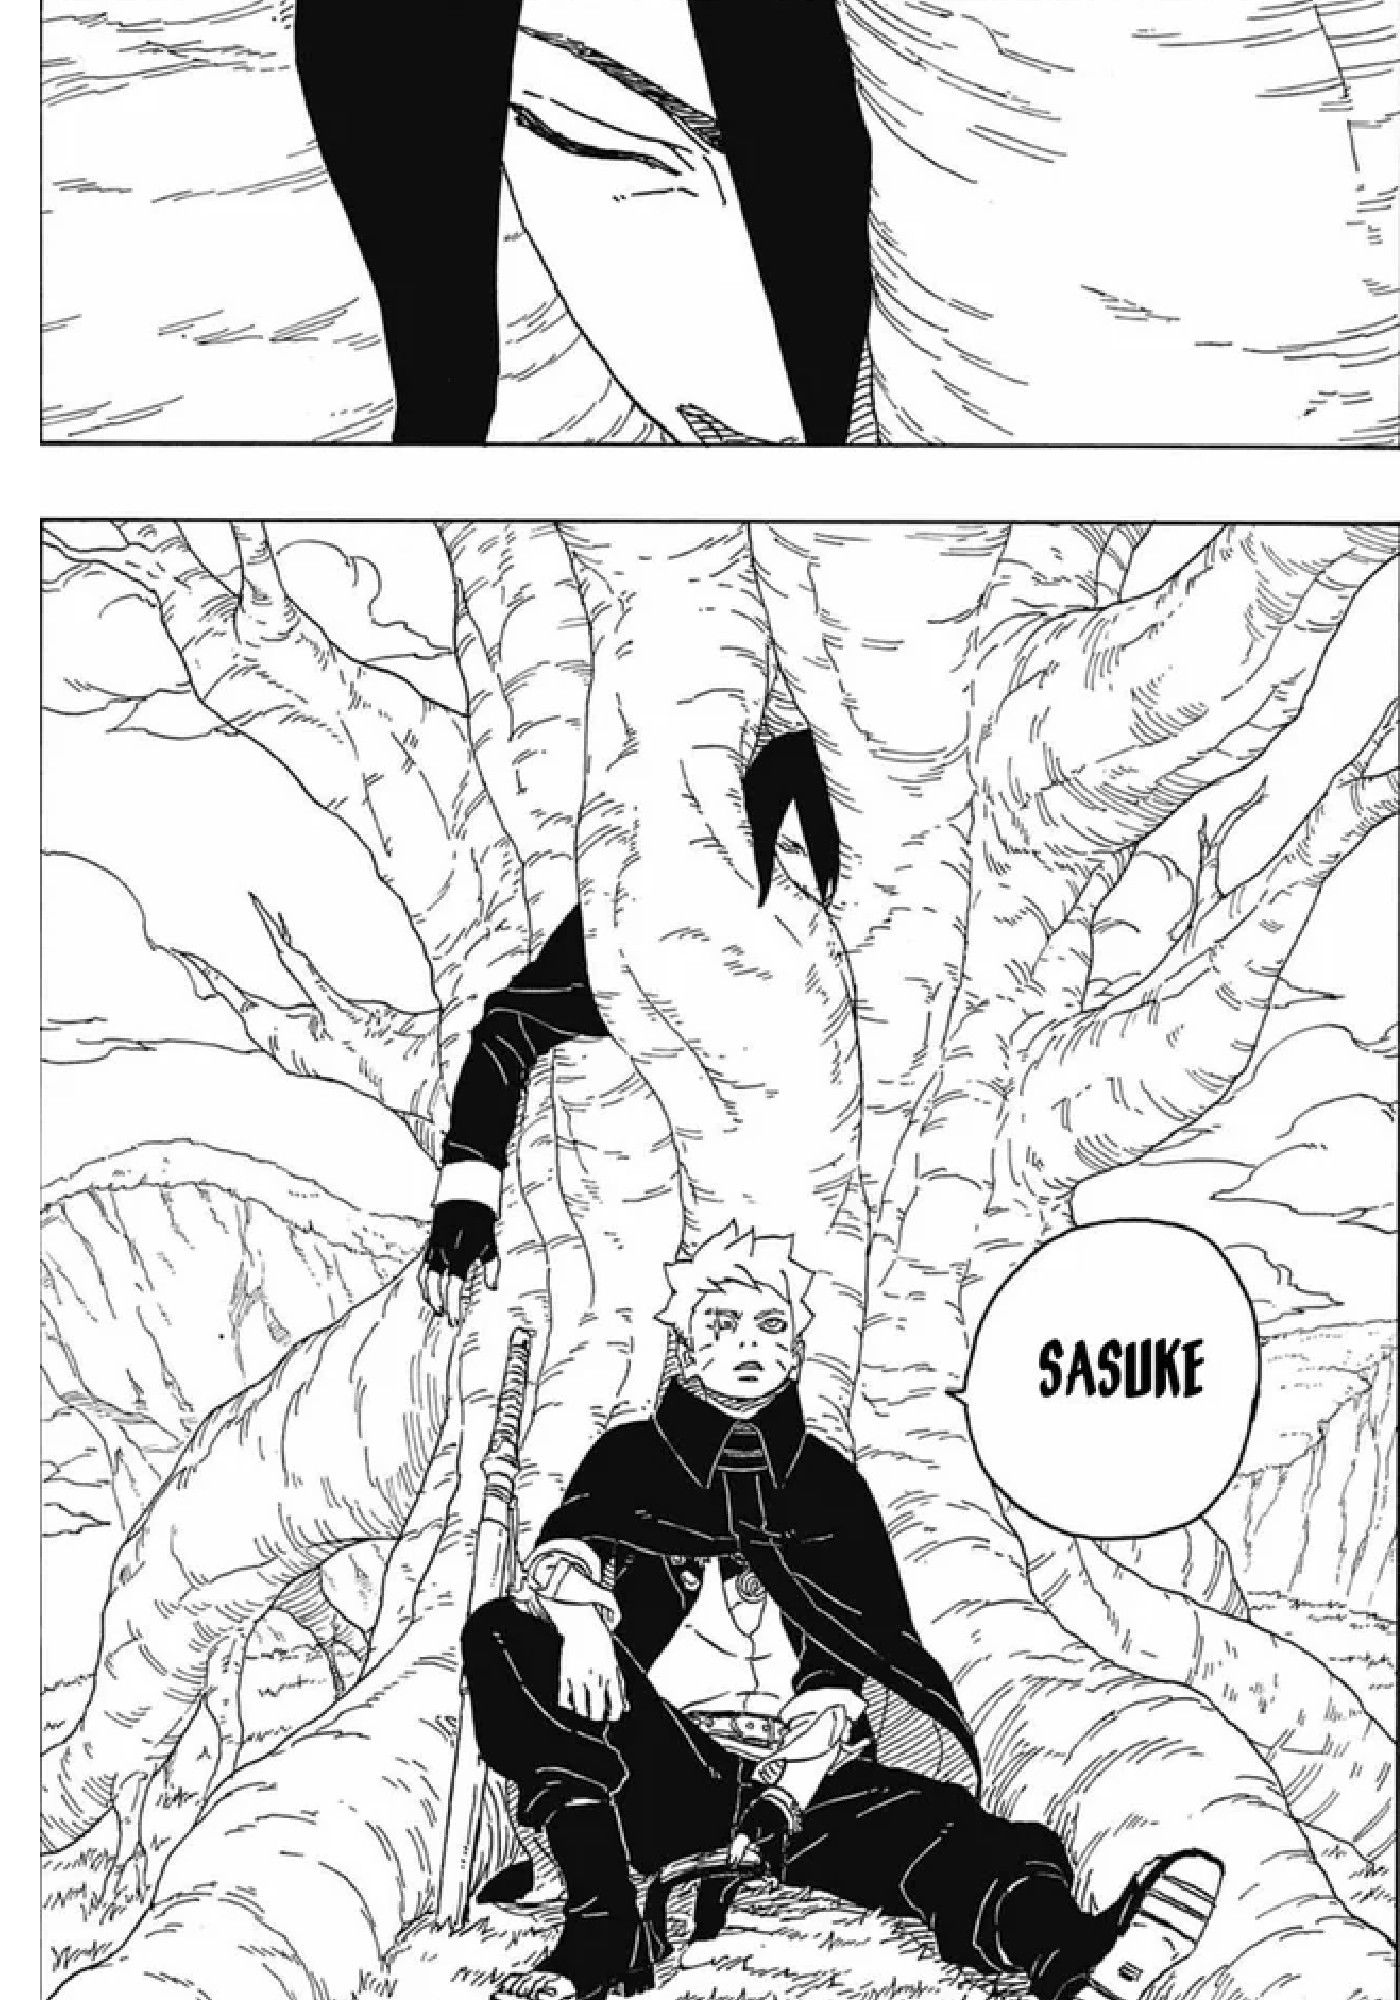 Sasuke in a tree